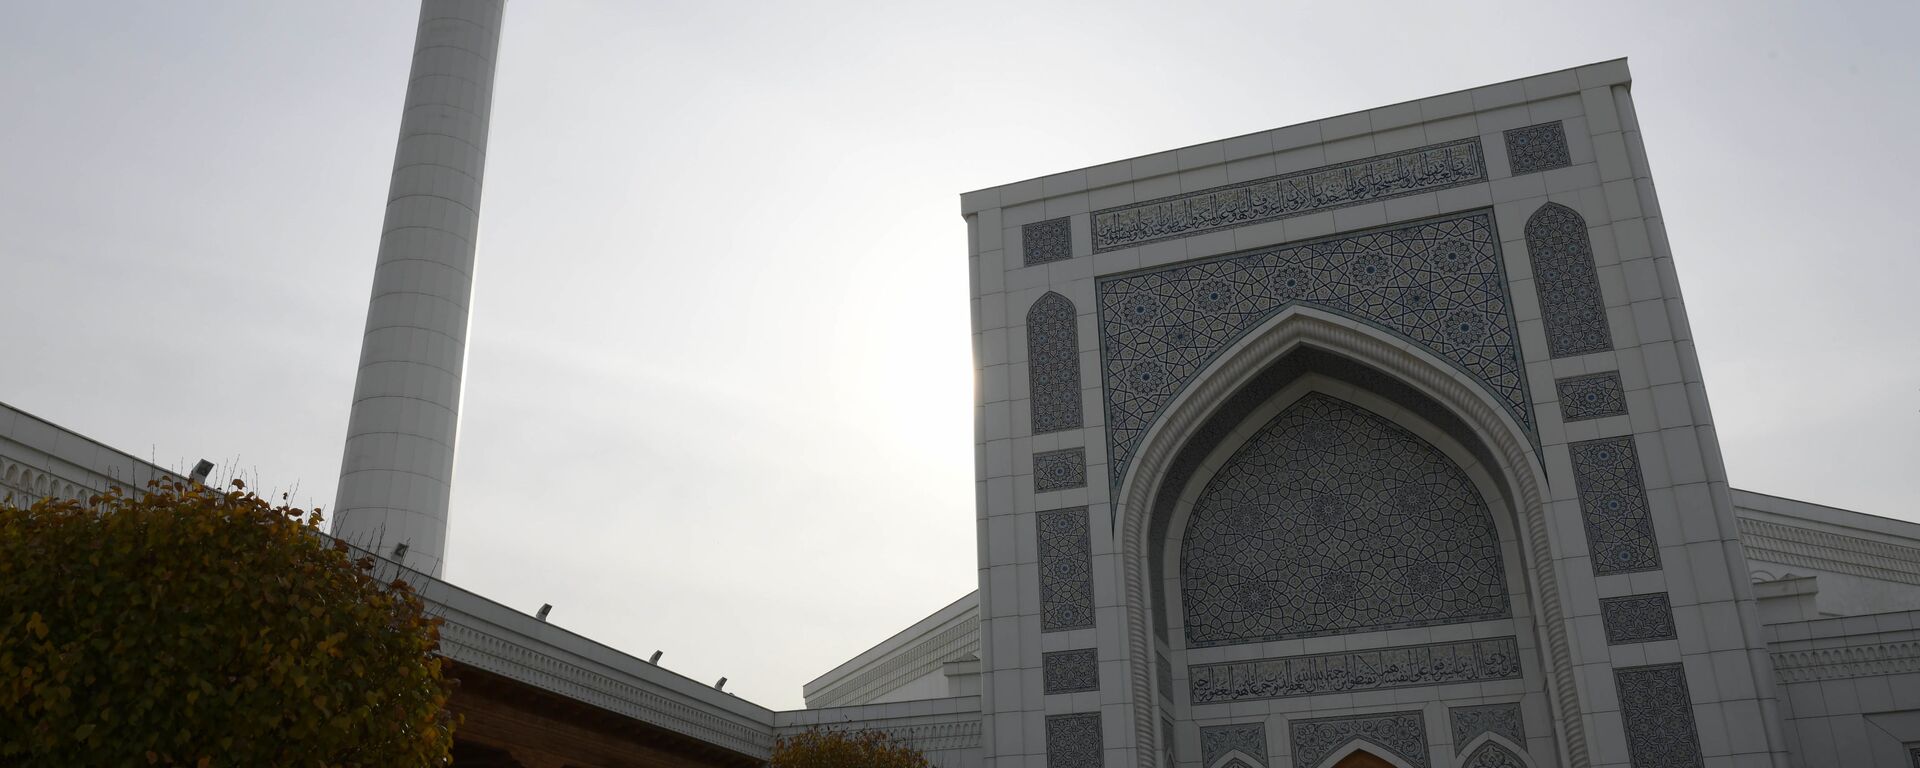 Один из минаретов мечети Минор (вид с территори мечети) - Sputnik Узбекистан, 1920, 17.07.2021